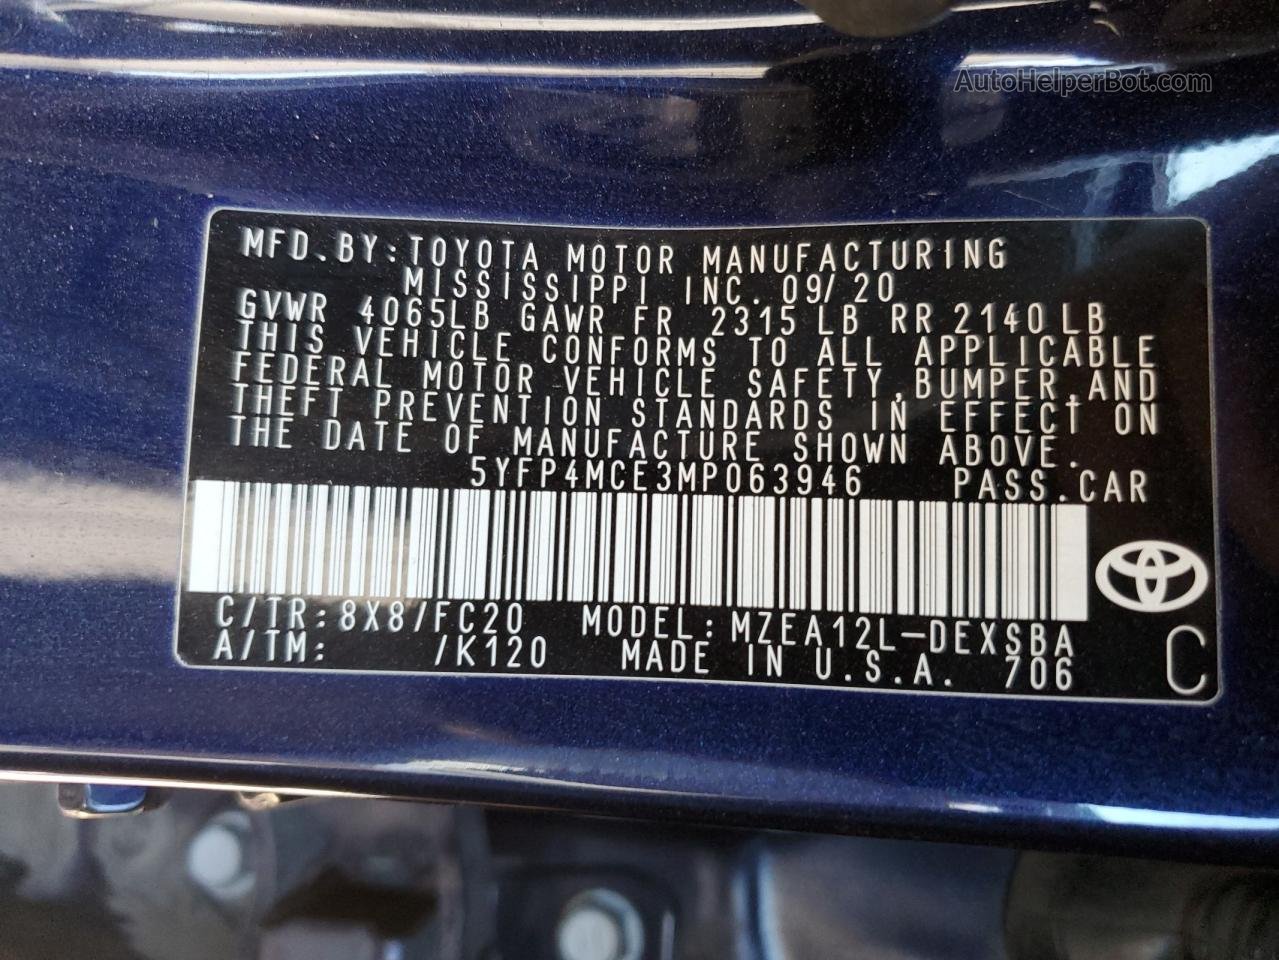 2021 Toyota Corolla Se Blue vin: 5YFP4MCE3MP063946